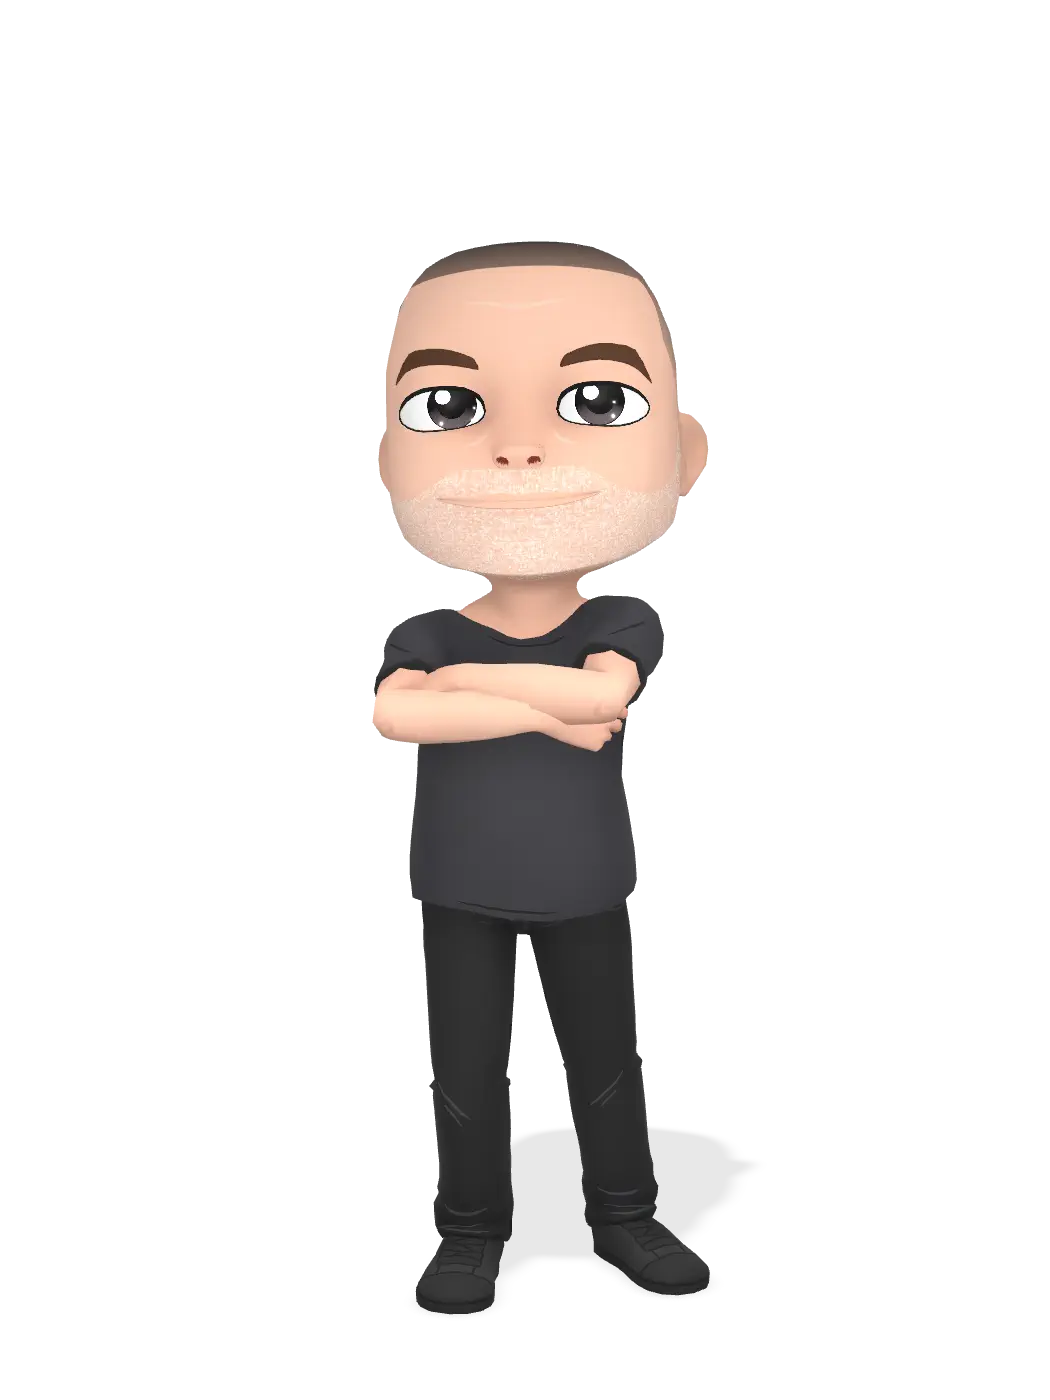 3D Bitmoji for spilasnap avatar